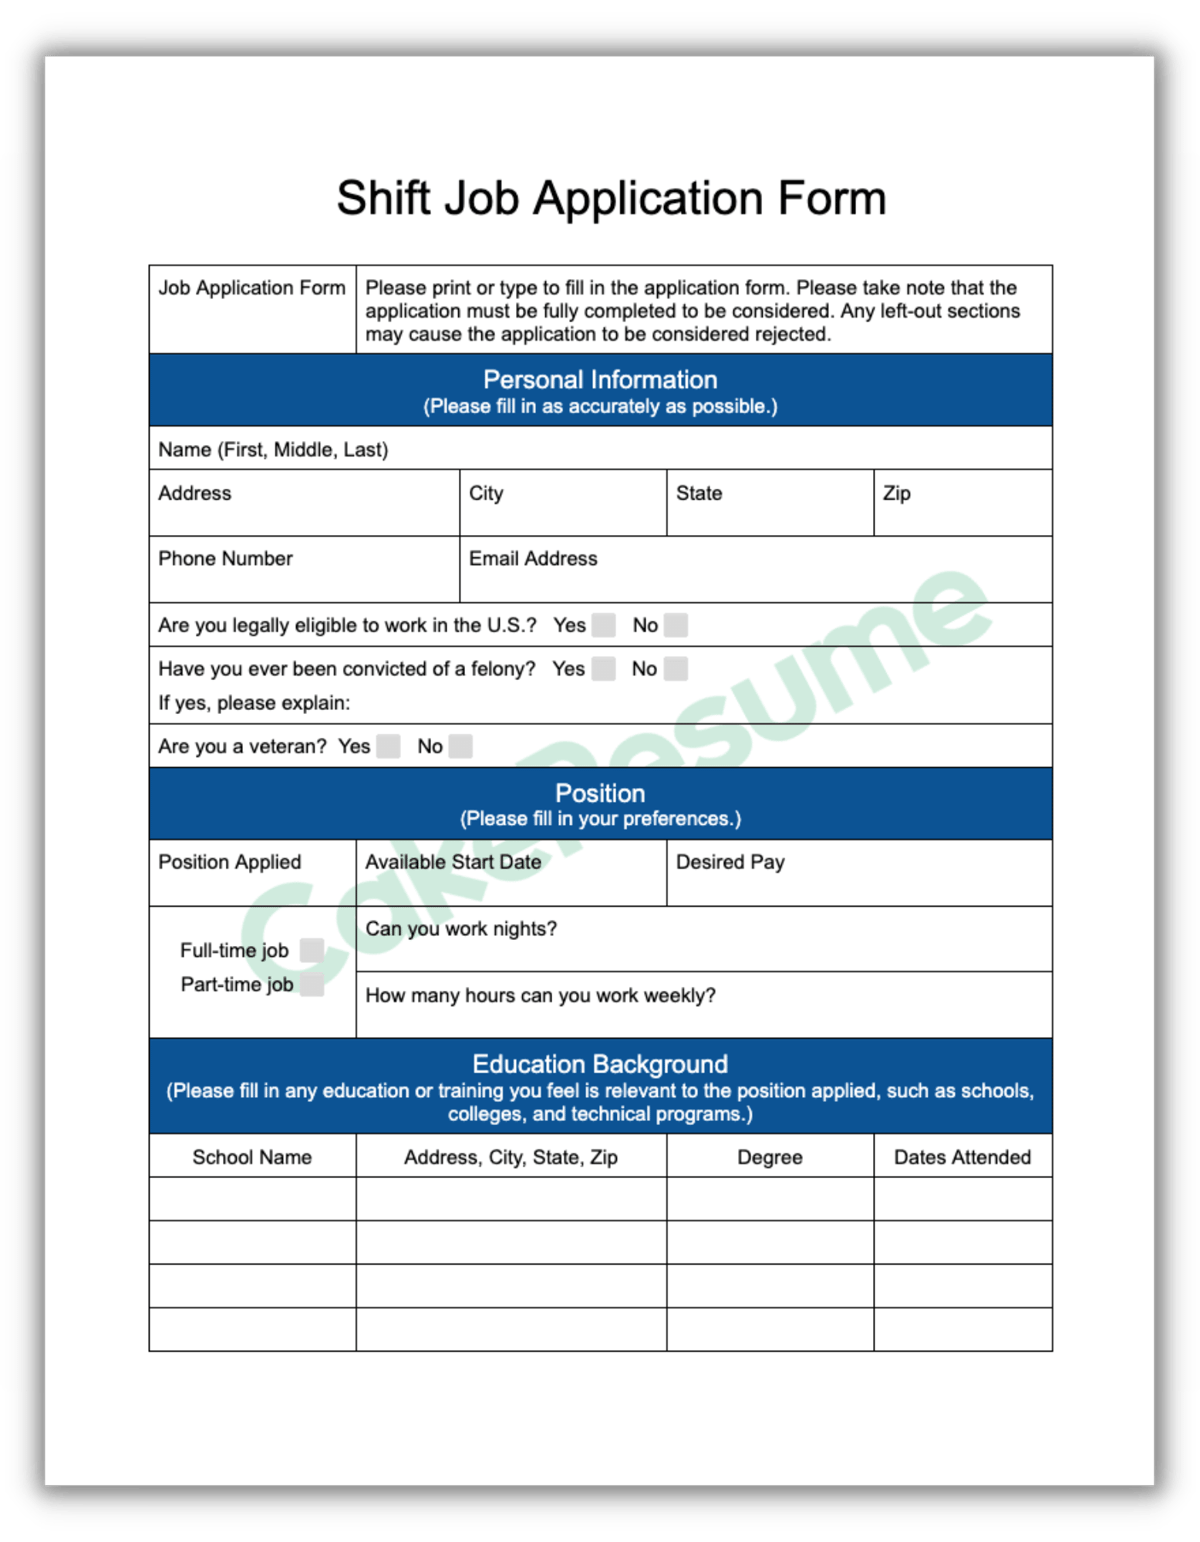 Shift job application form sample